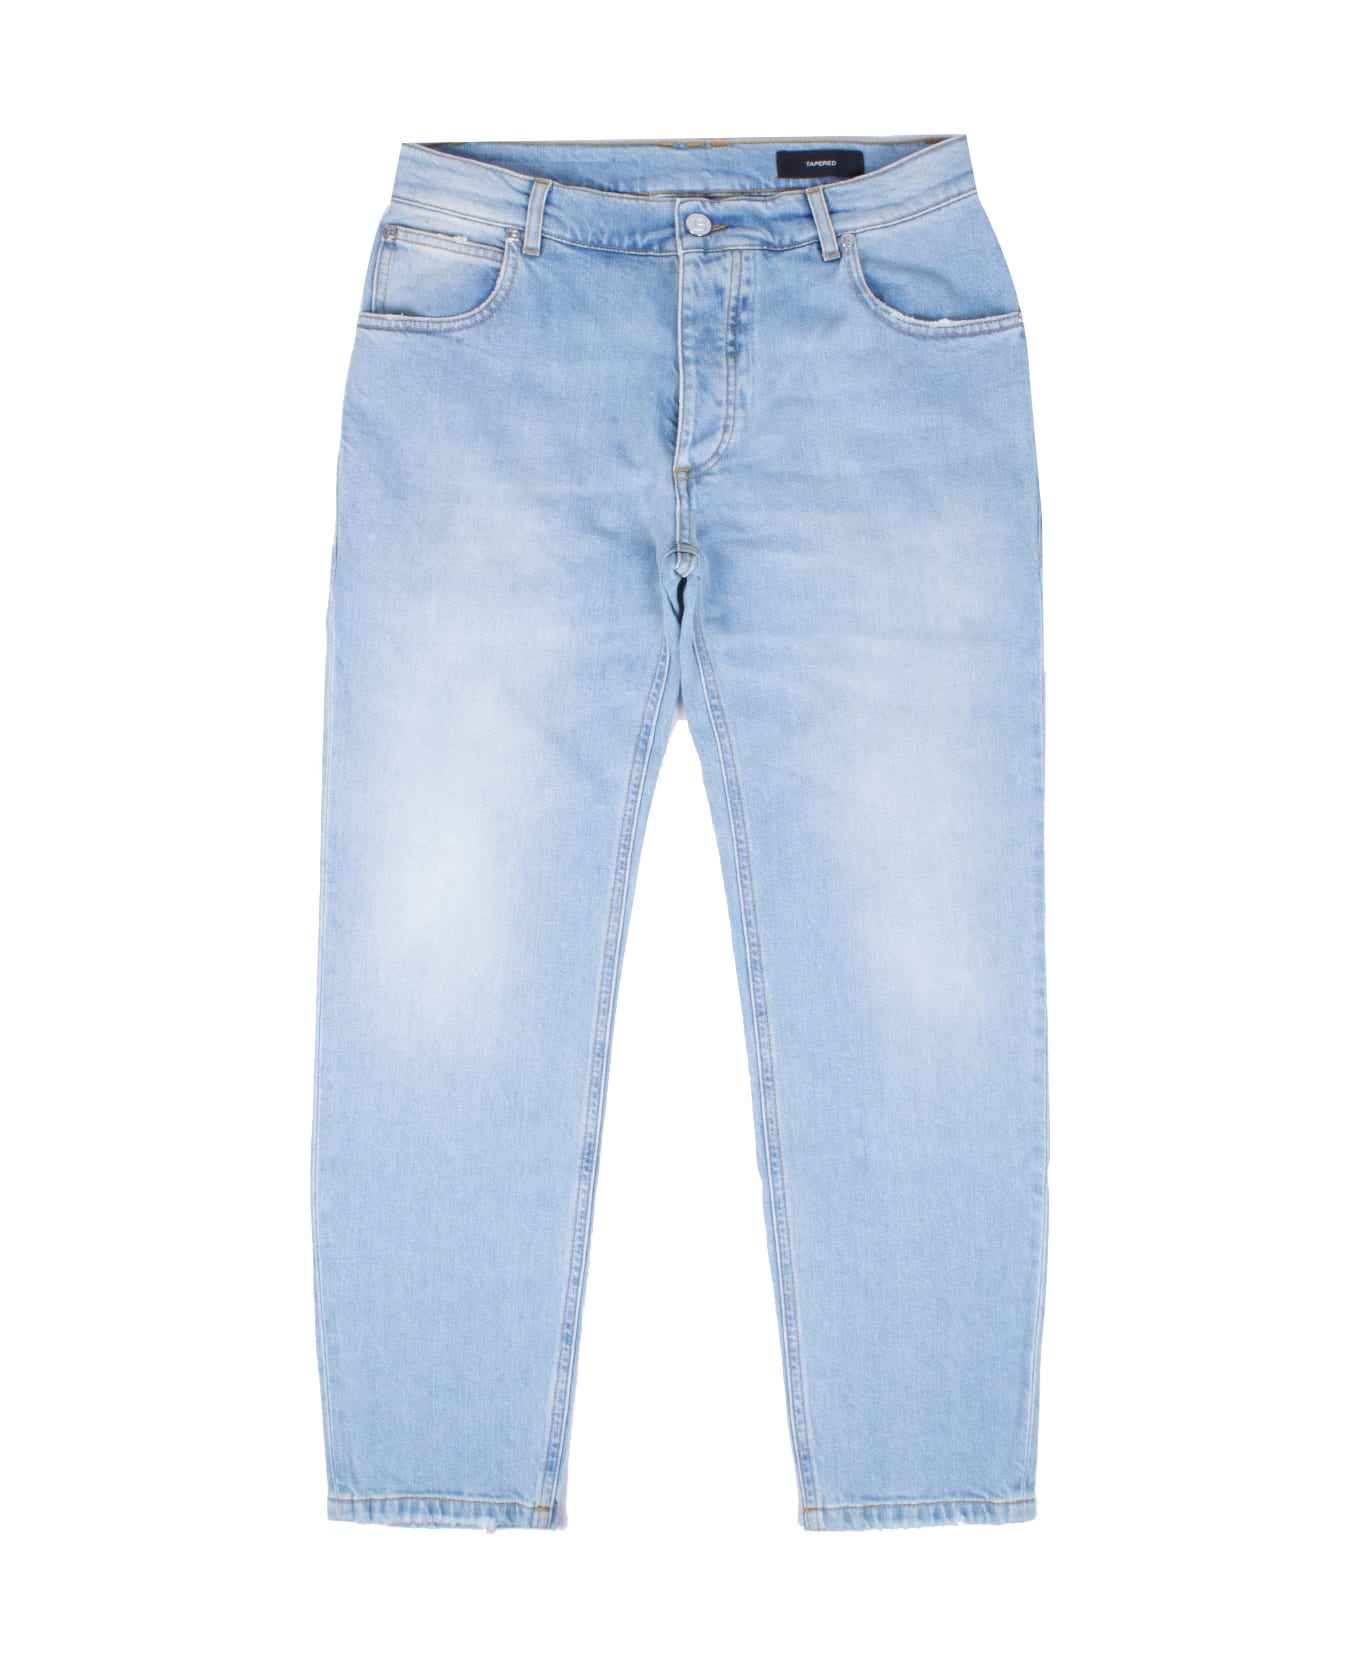 Balmain Cotton Jeans - Light blue